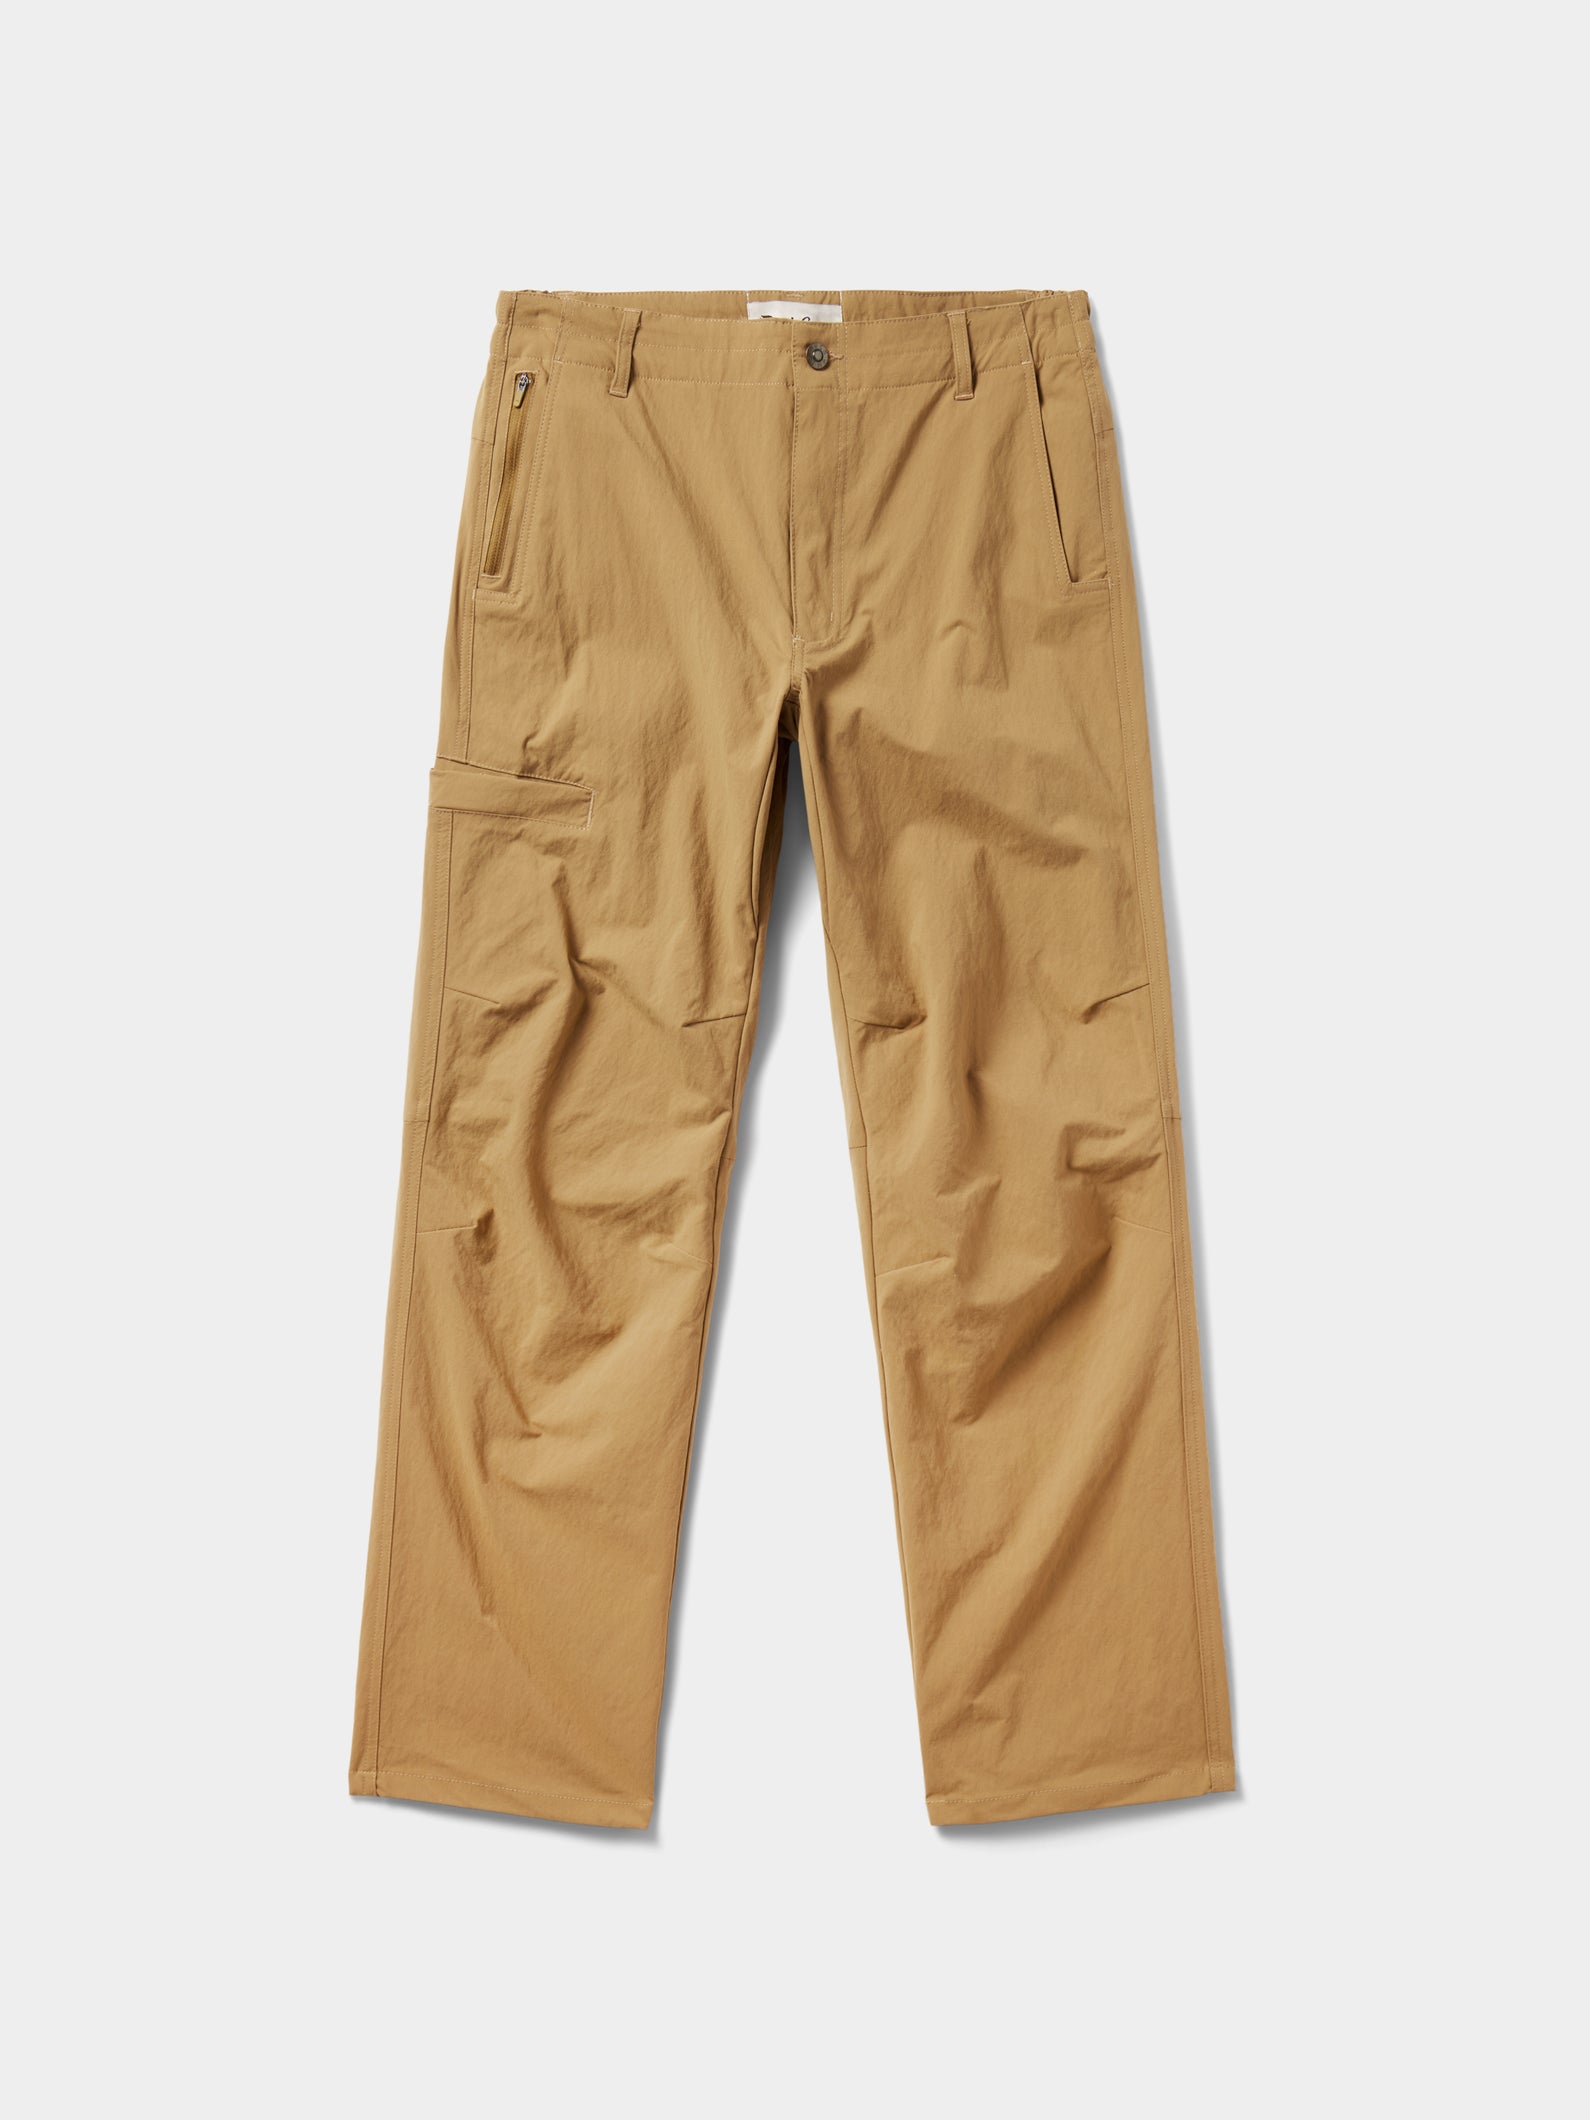 Men's Drifter Pants - Pintail Brown